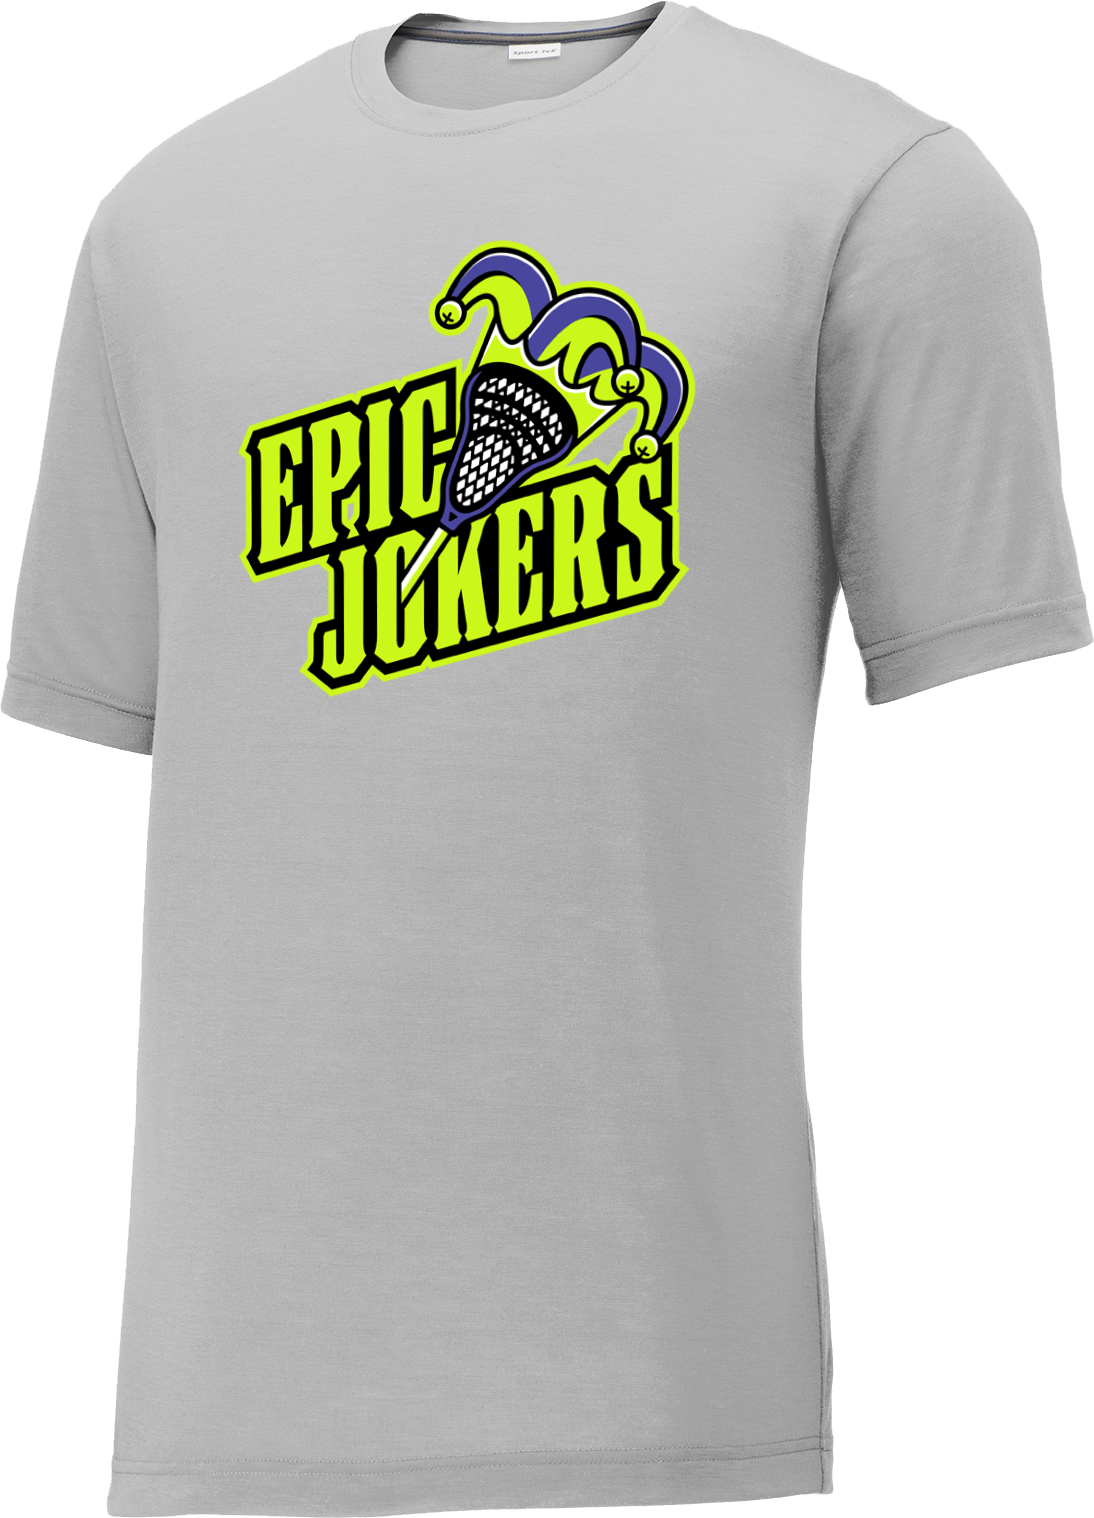 Epic Jokers Lacrosse Grey CottonTouch Performance T-Shirt